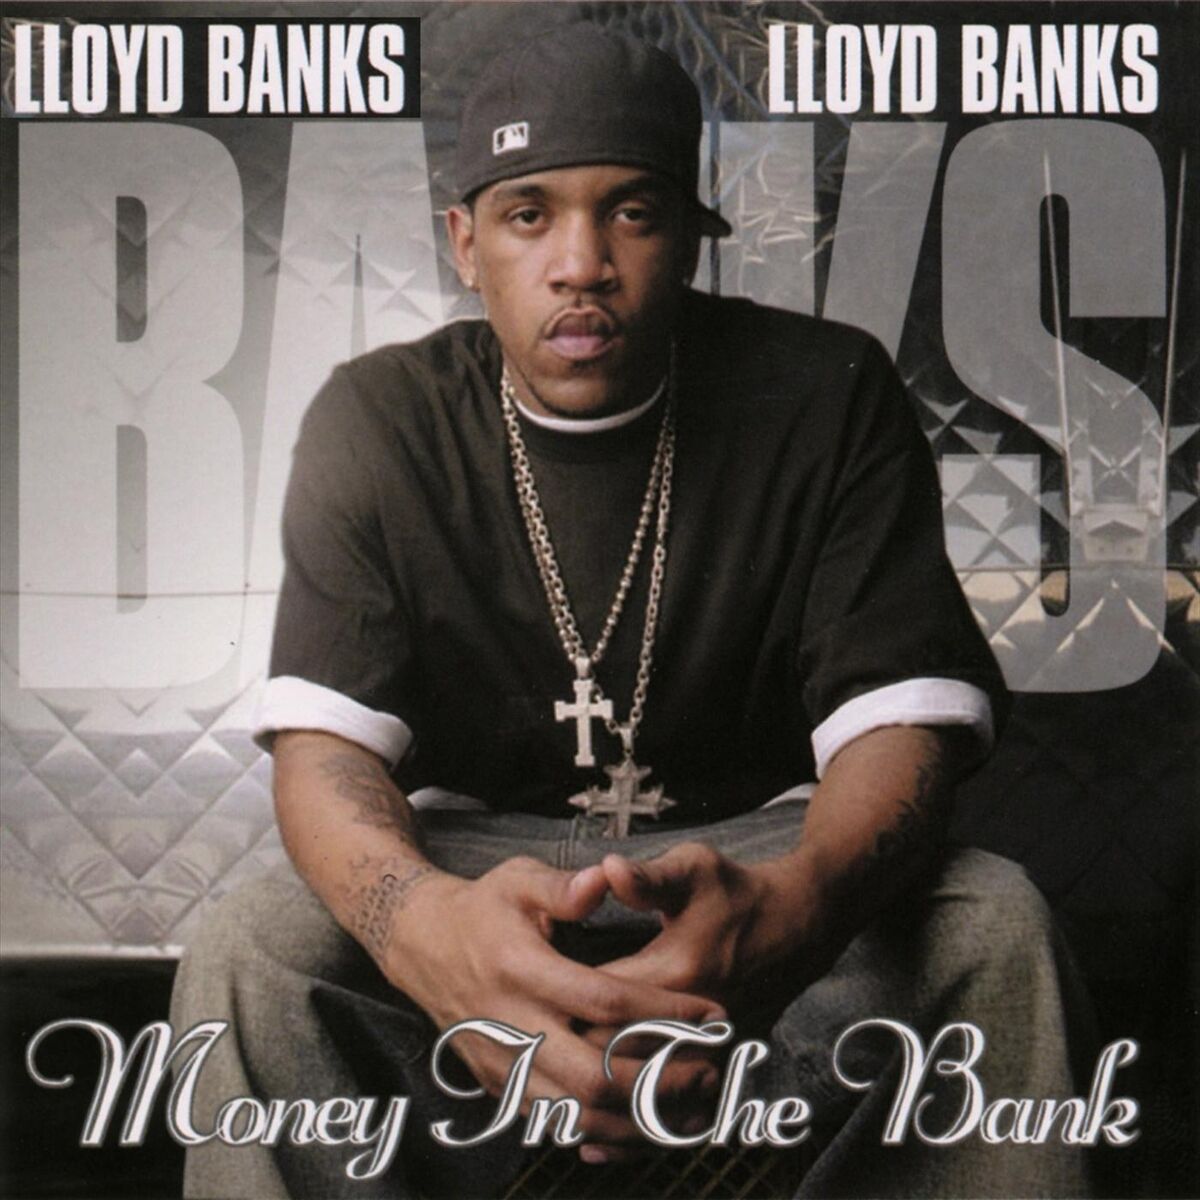 Lloyd Banks: albums, songs, playlists | Listen on Deezer